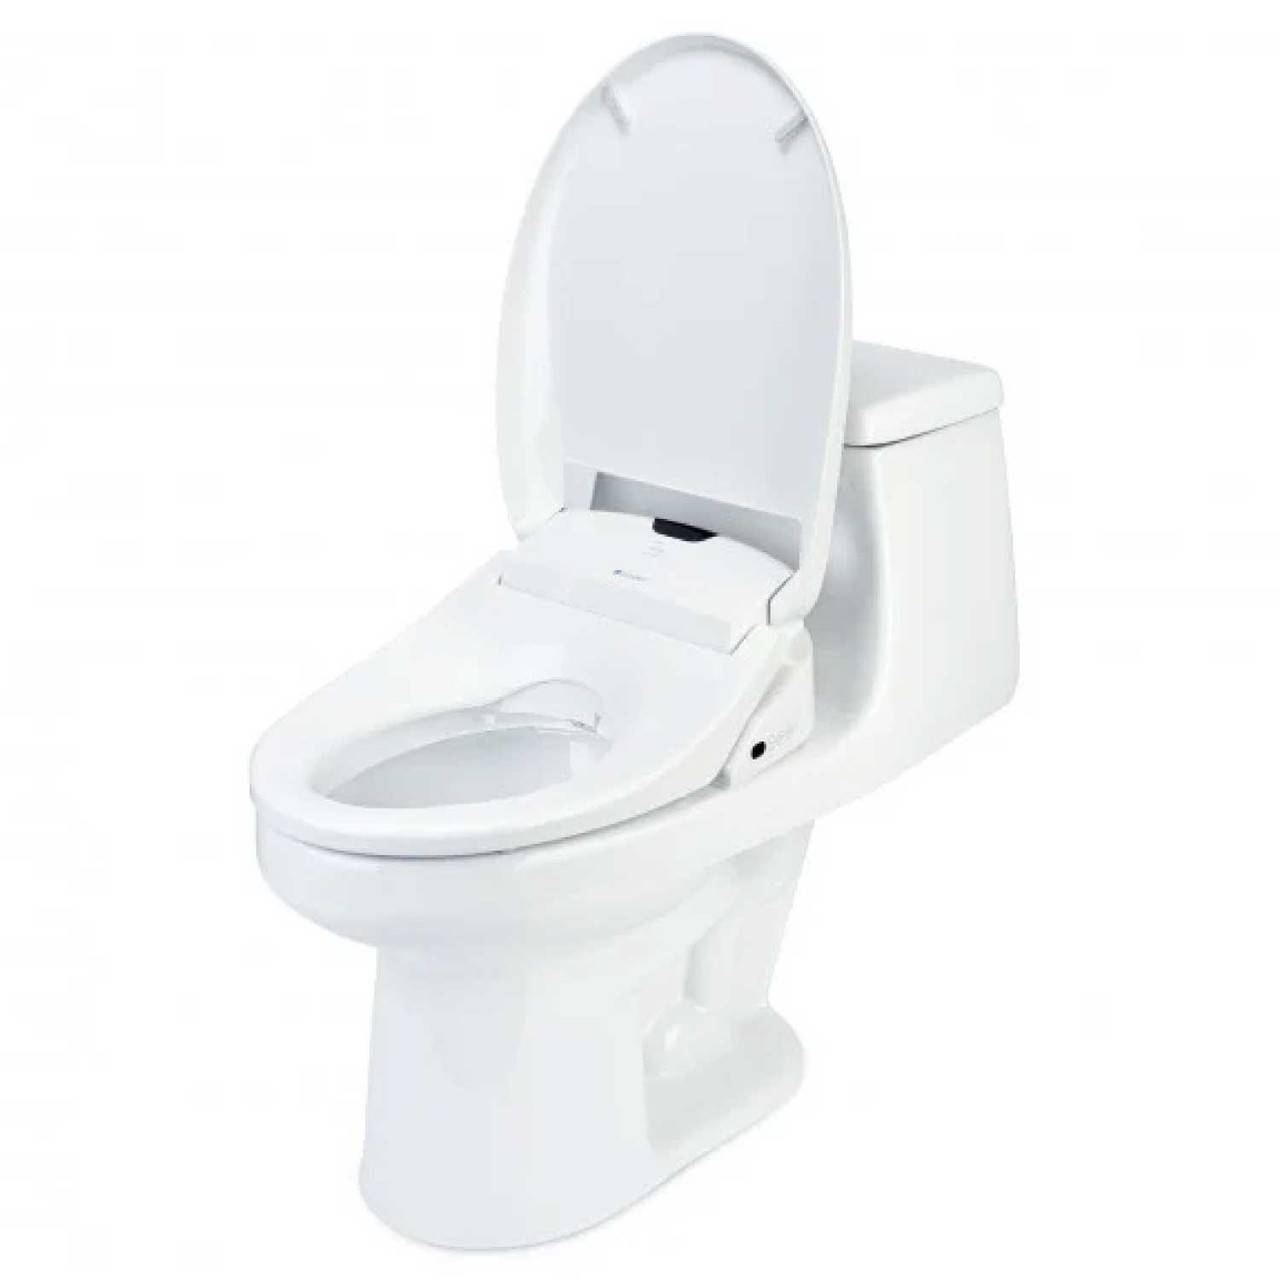 Brondell Swash 1400 White Luxury Bidet Toilet Seat - Elongated